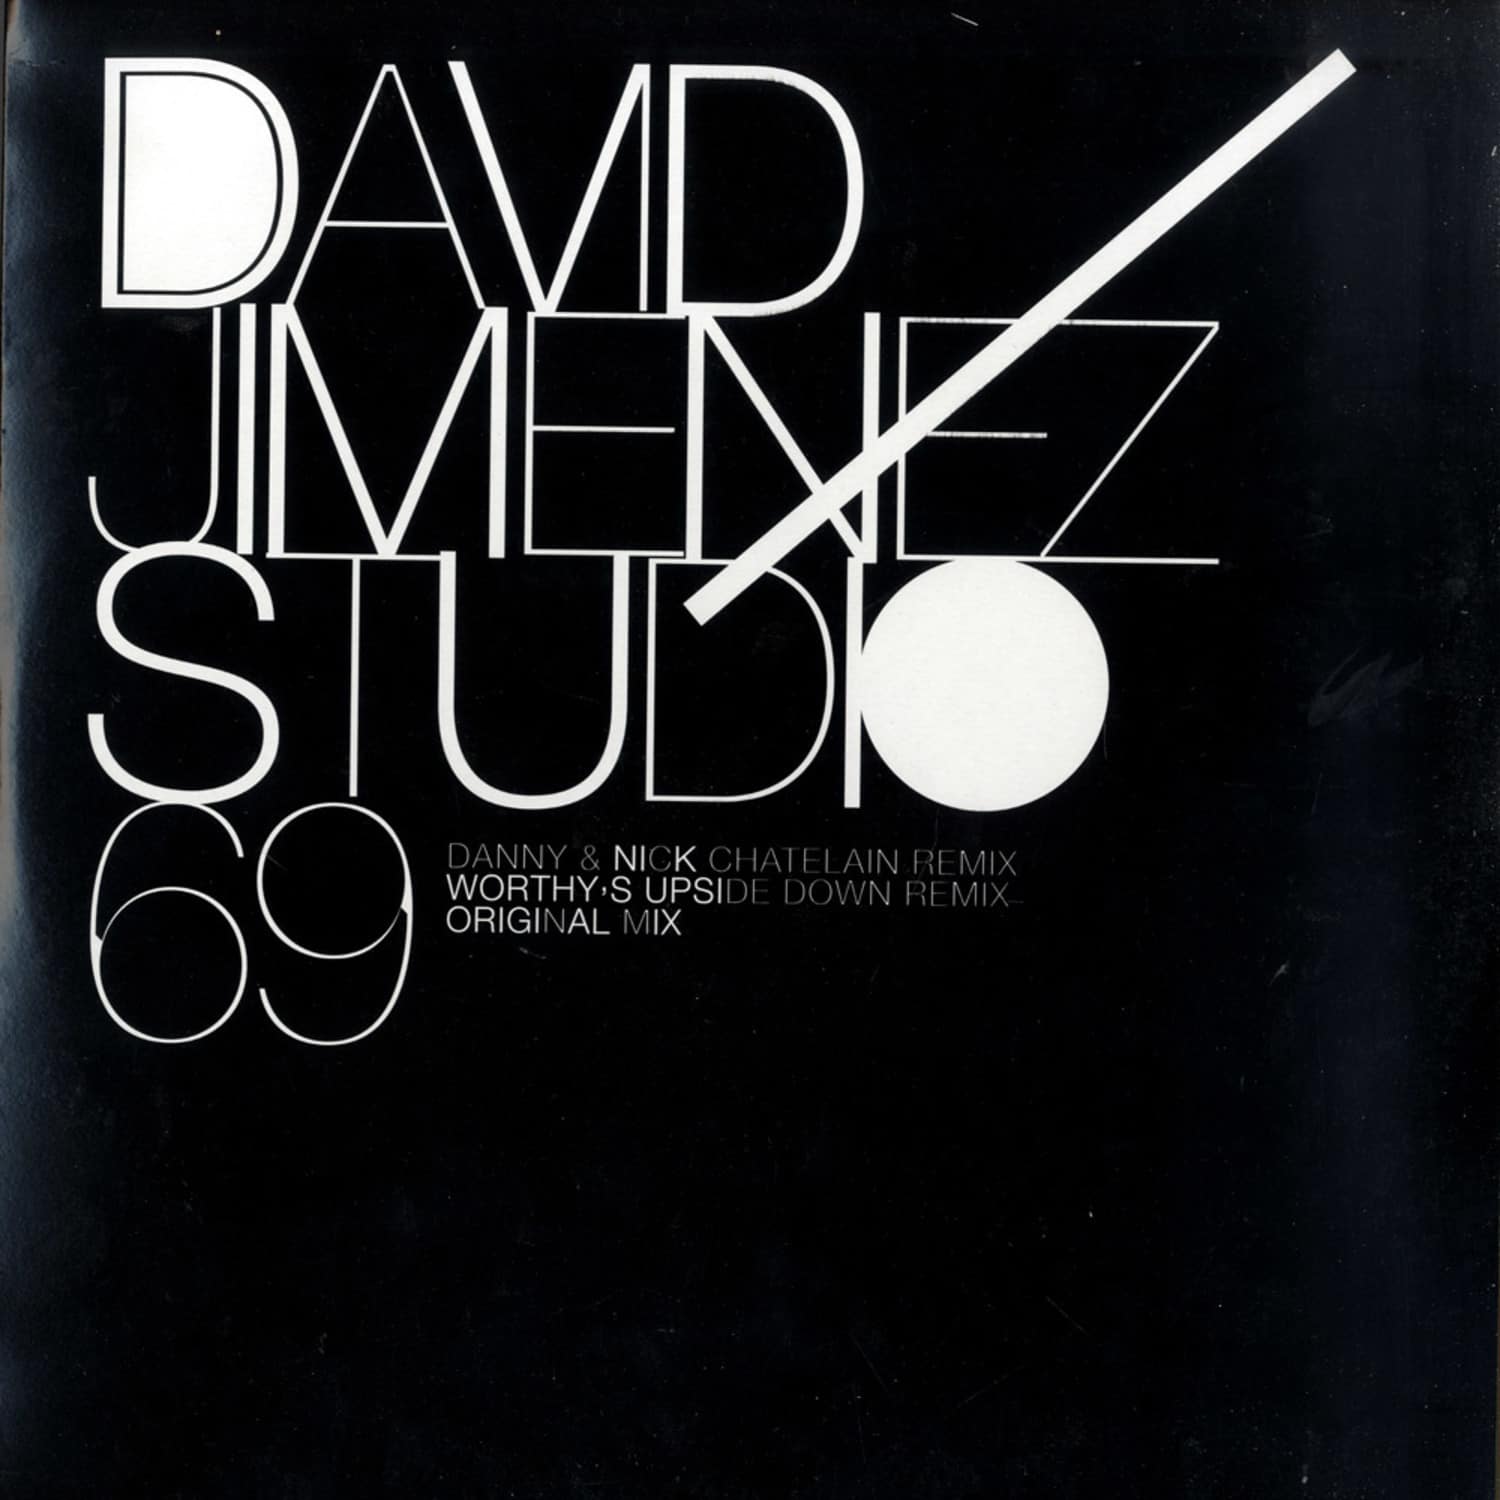 David Jimenez - STUDIO 69